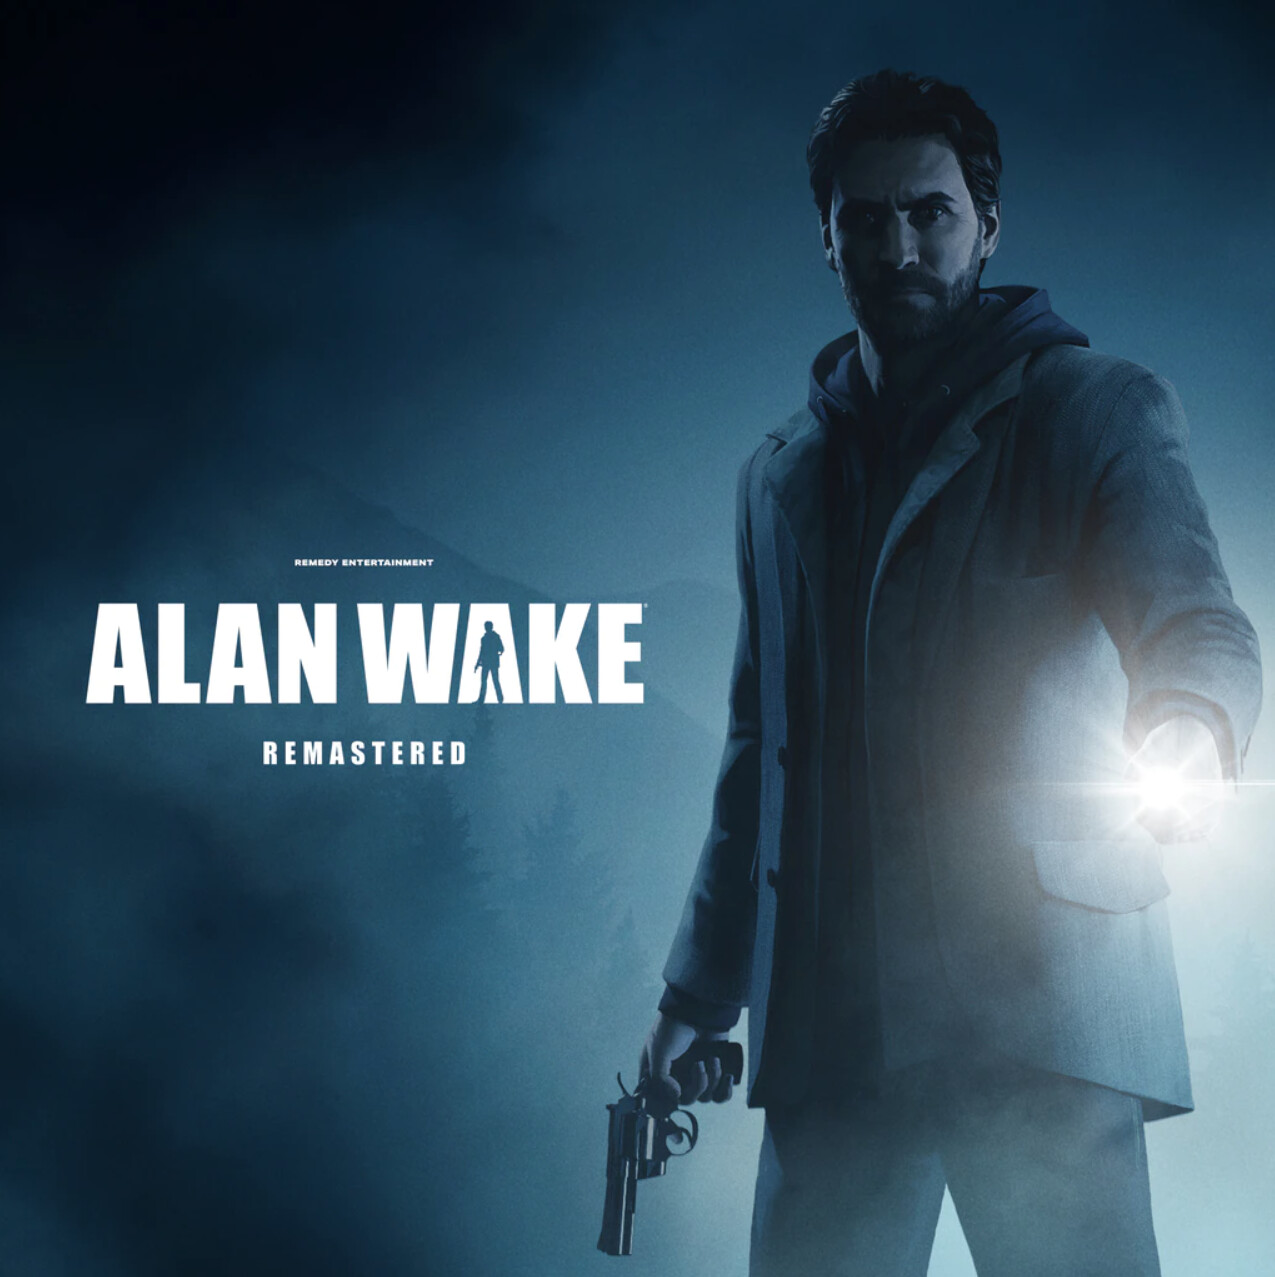 Steam Game Covers: Alan Wake